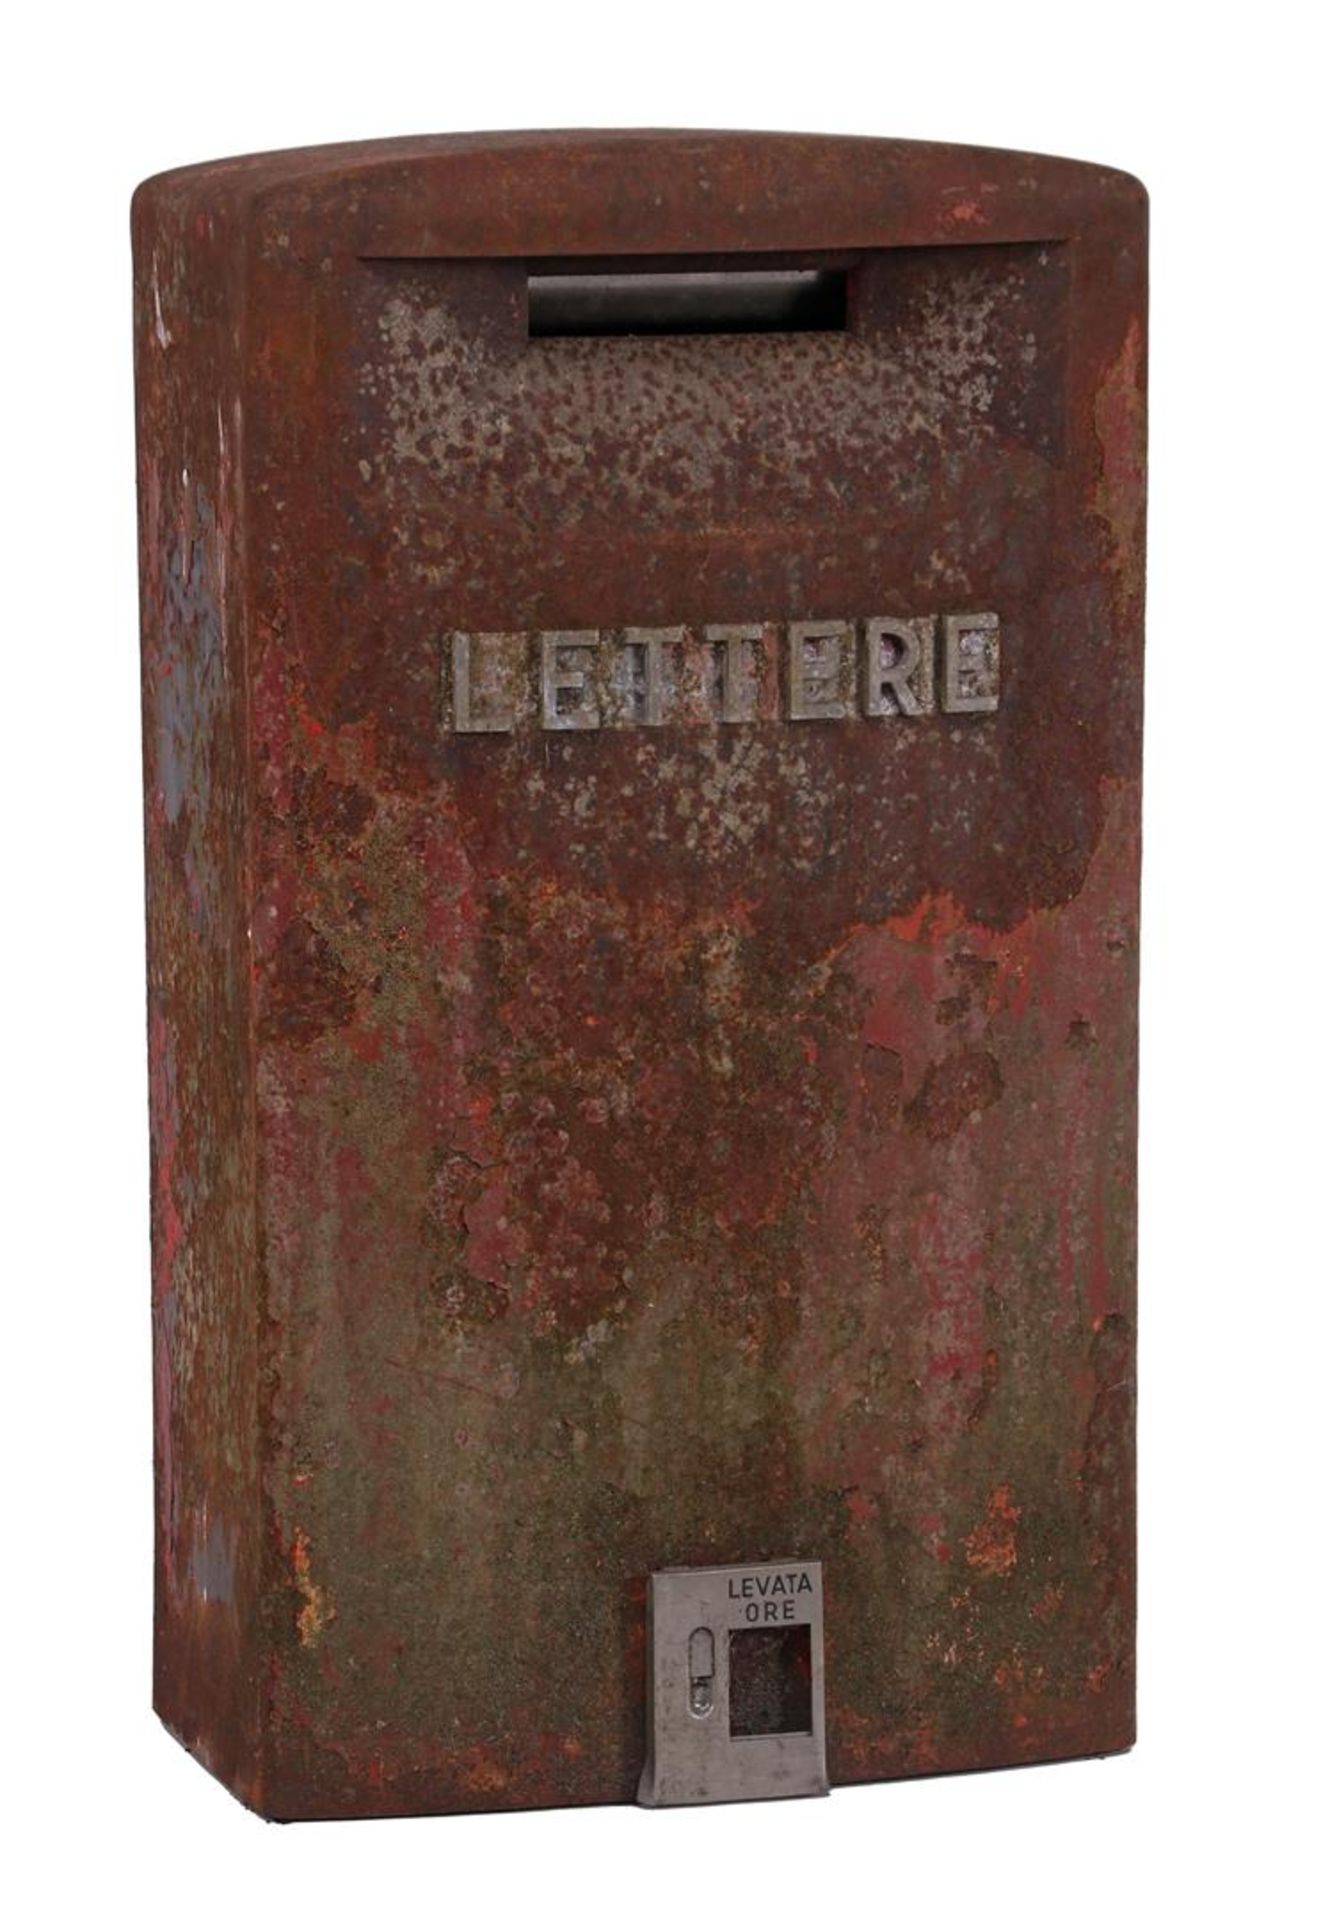 Metal letterbox